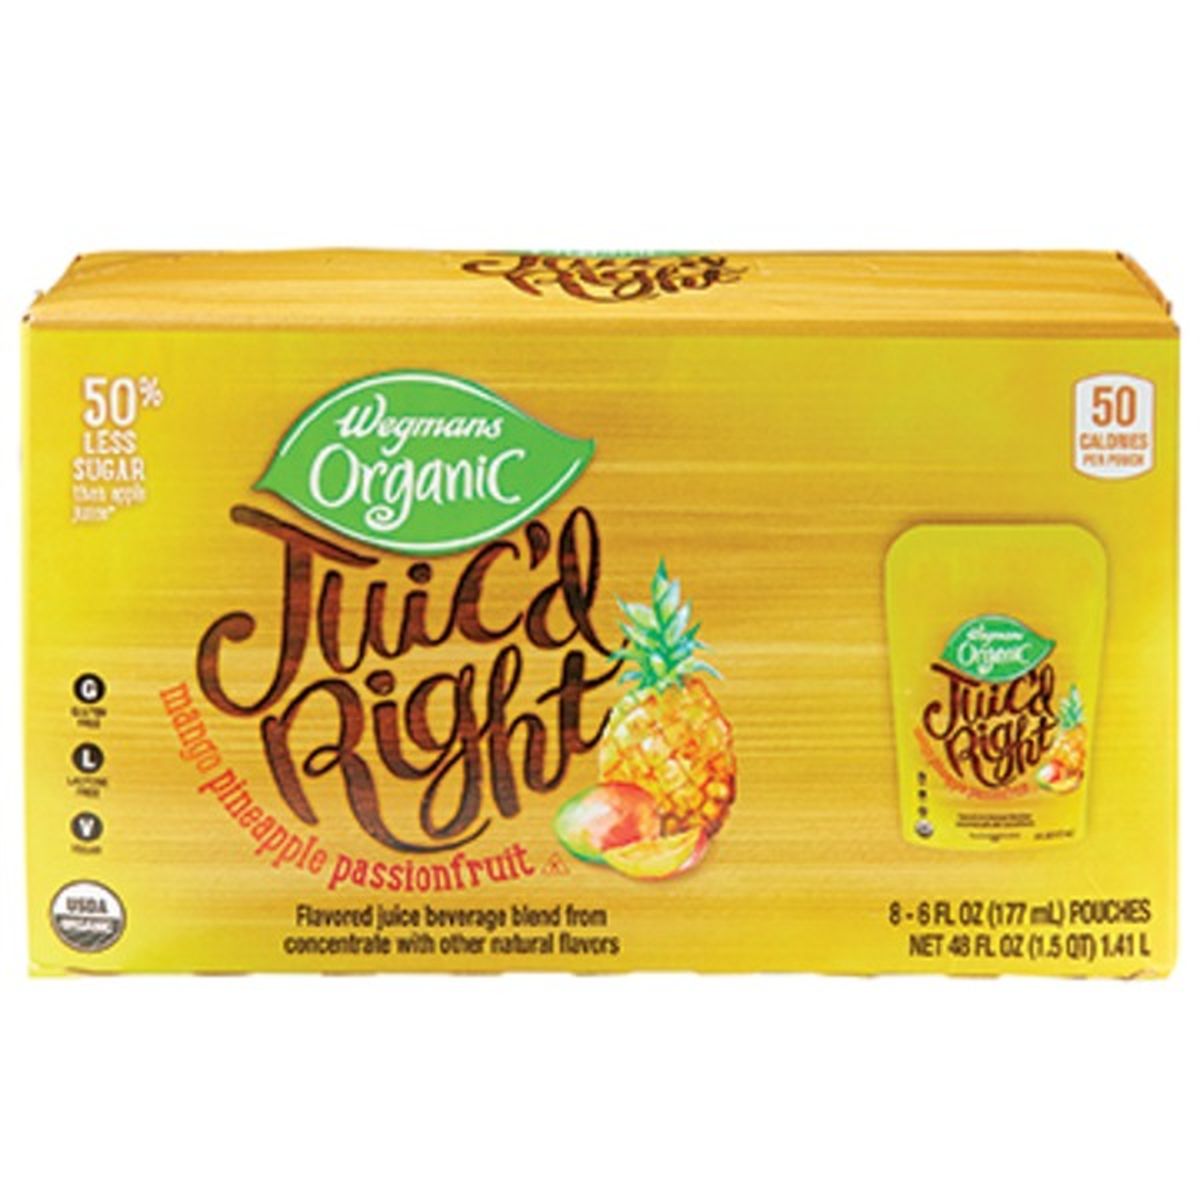 Calories in Wegmans Organic Juic'd Right, Mango Pineapple Passionfruit Juice Pouches